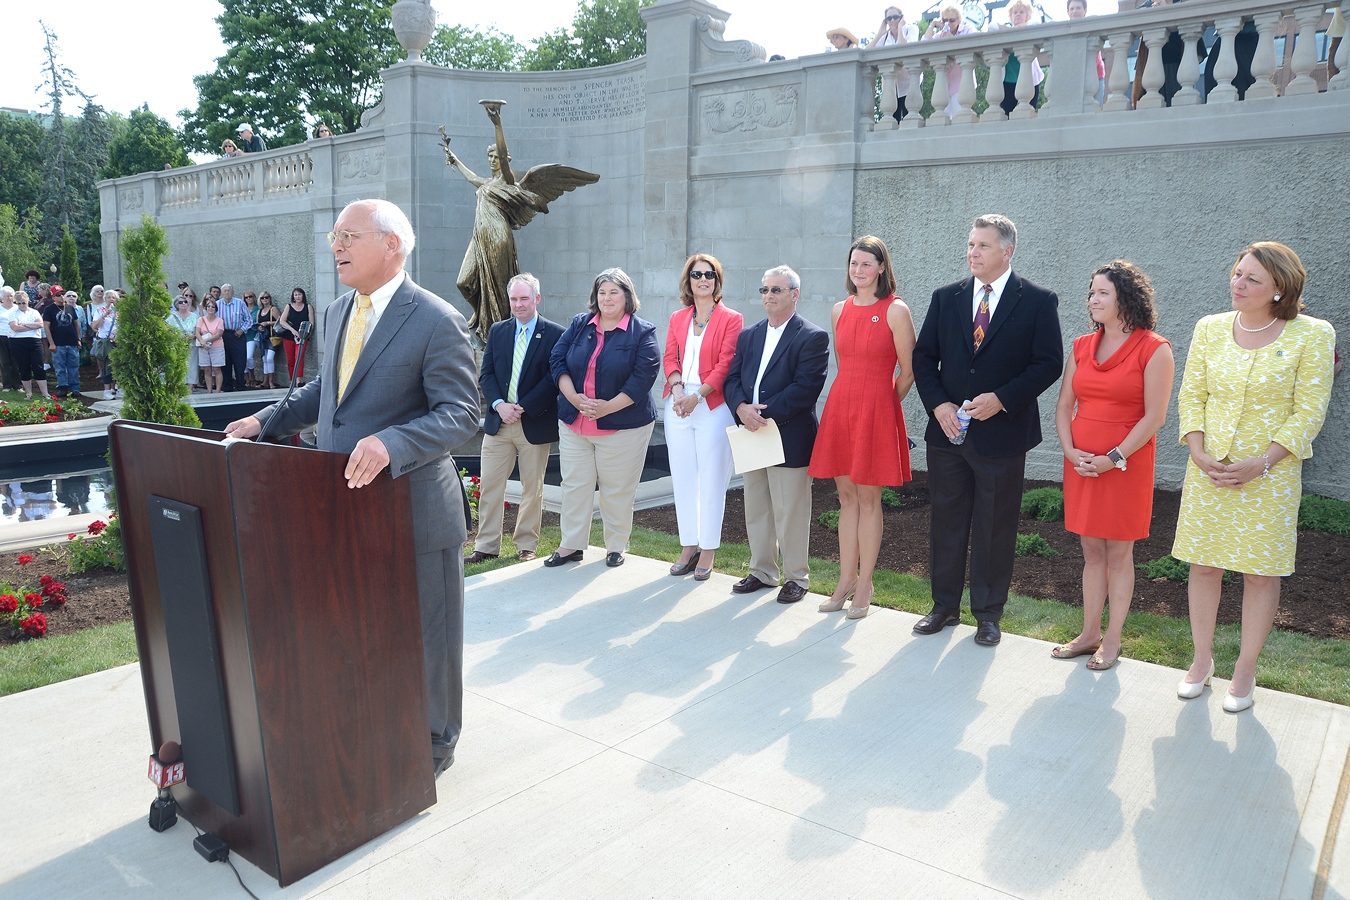 Congressman Paul Tonko and other officials at the re-dedication ceremony. Photo © 2015 SaratogaPhotographer.com